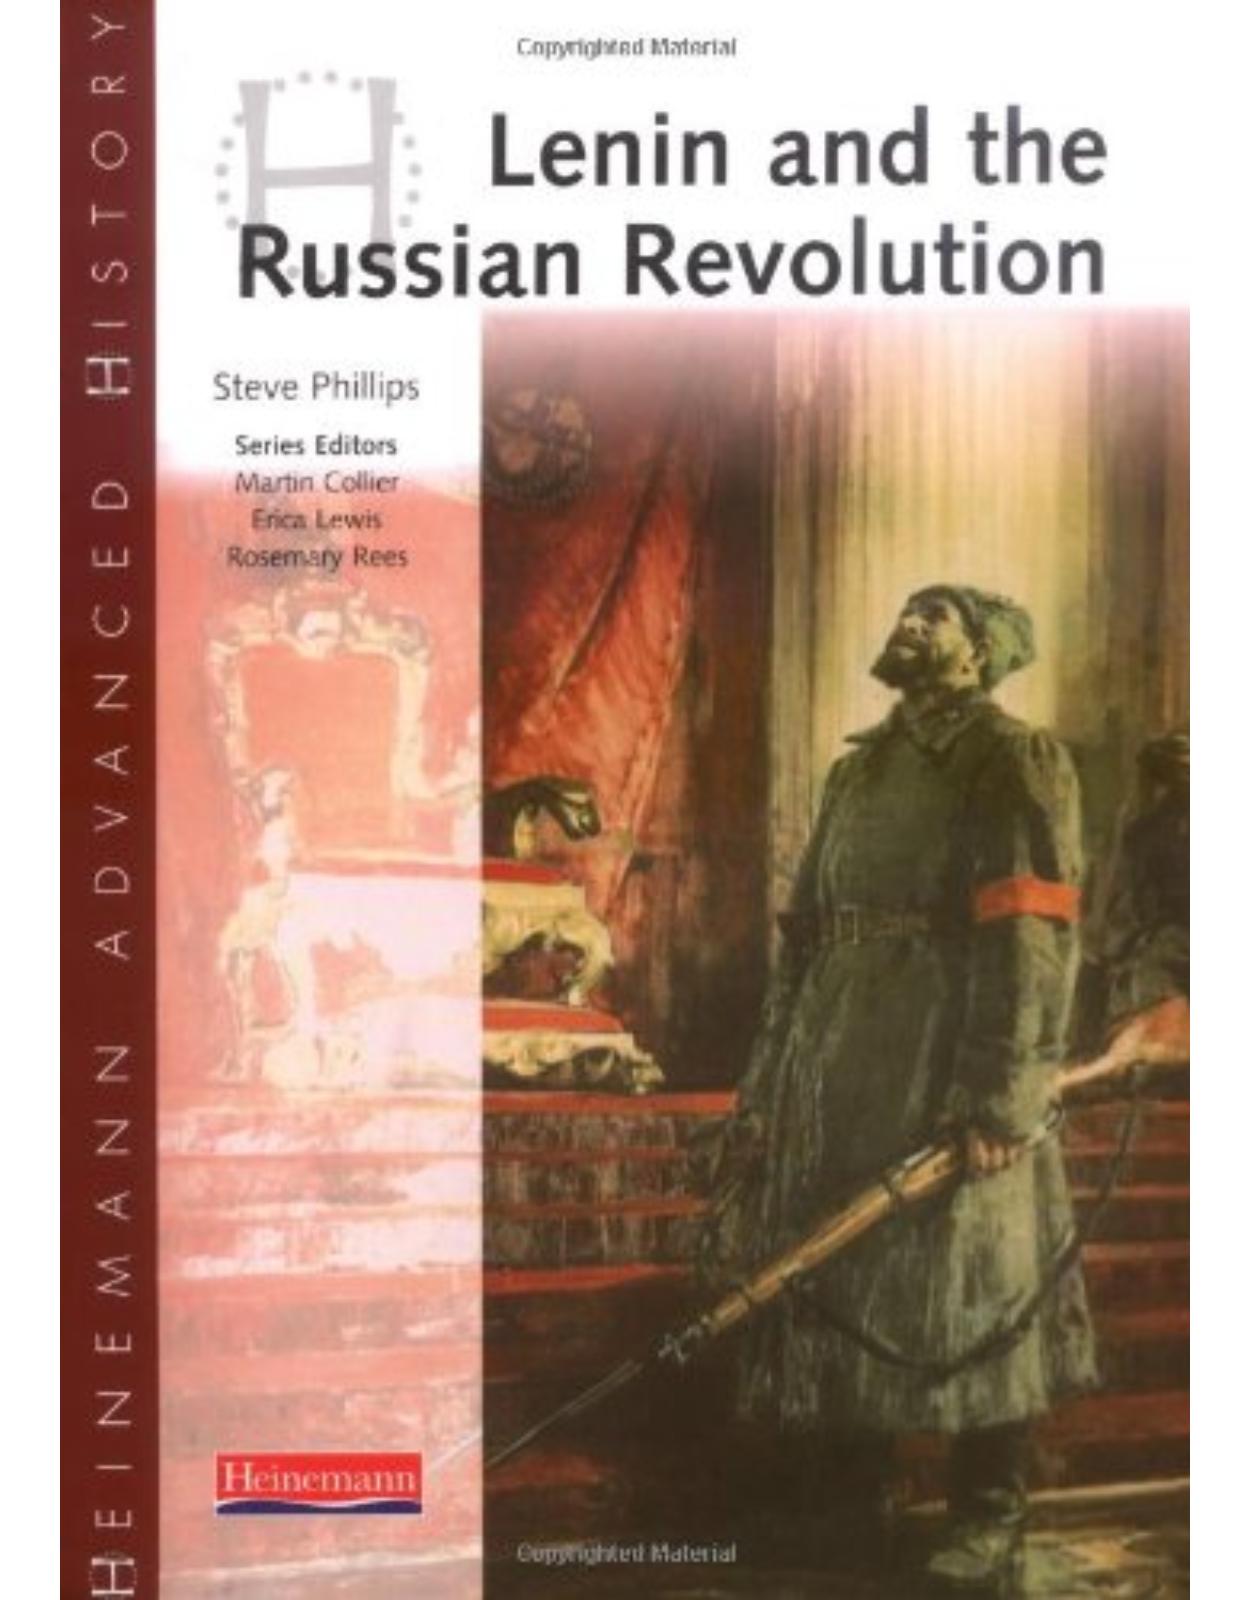 Heinemann Advanced History: Lenin and the Russian Revolution